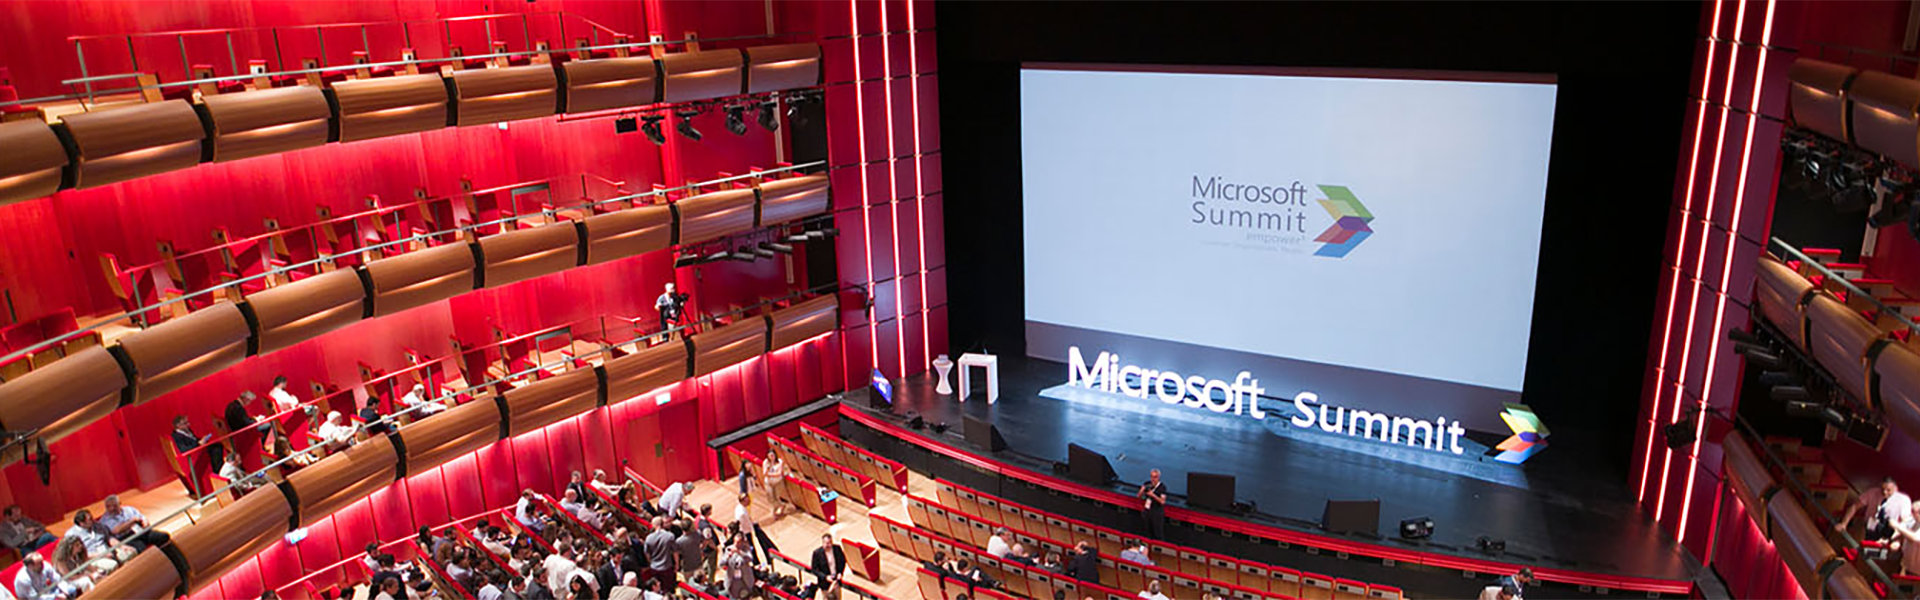 Microsoft Summit stage